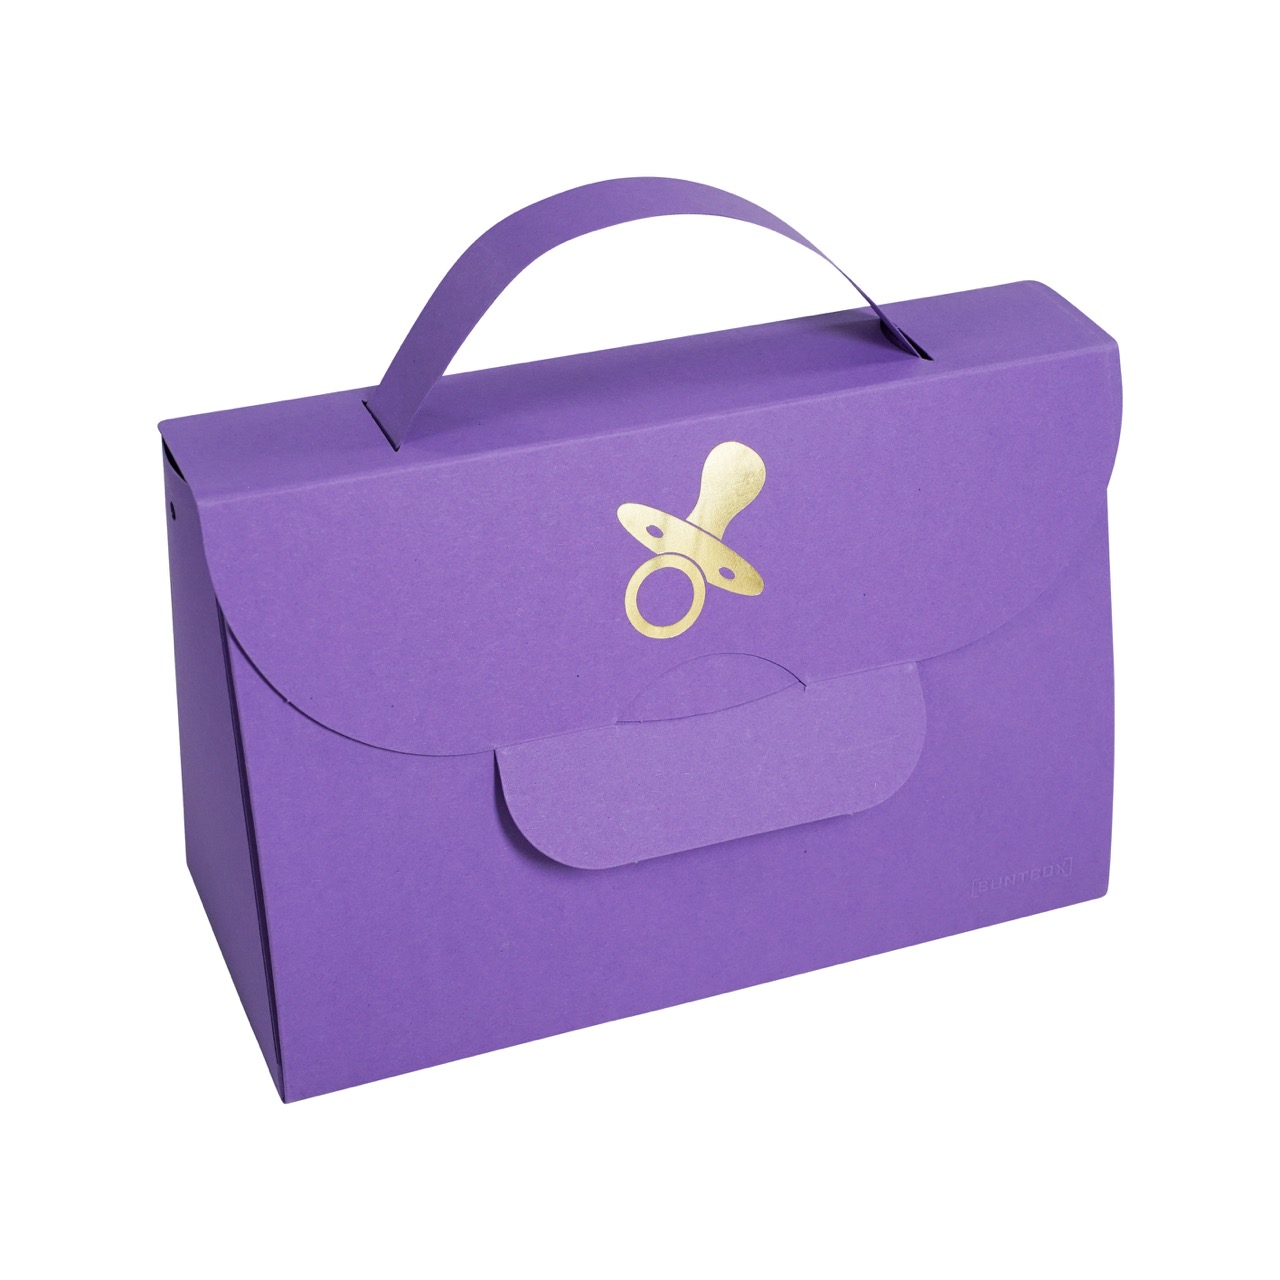 Buntbox Handbag XL Goldener Schnuller in Lavendel